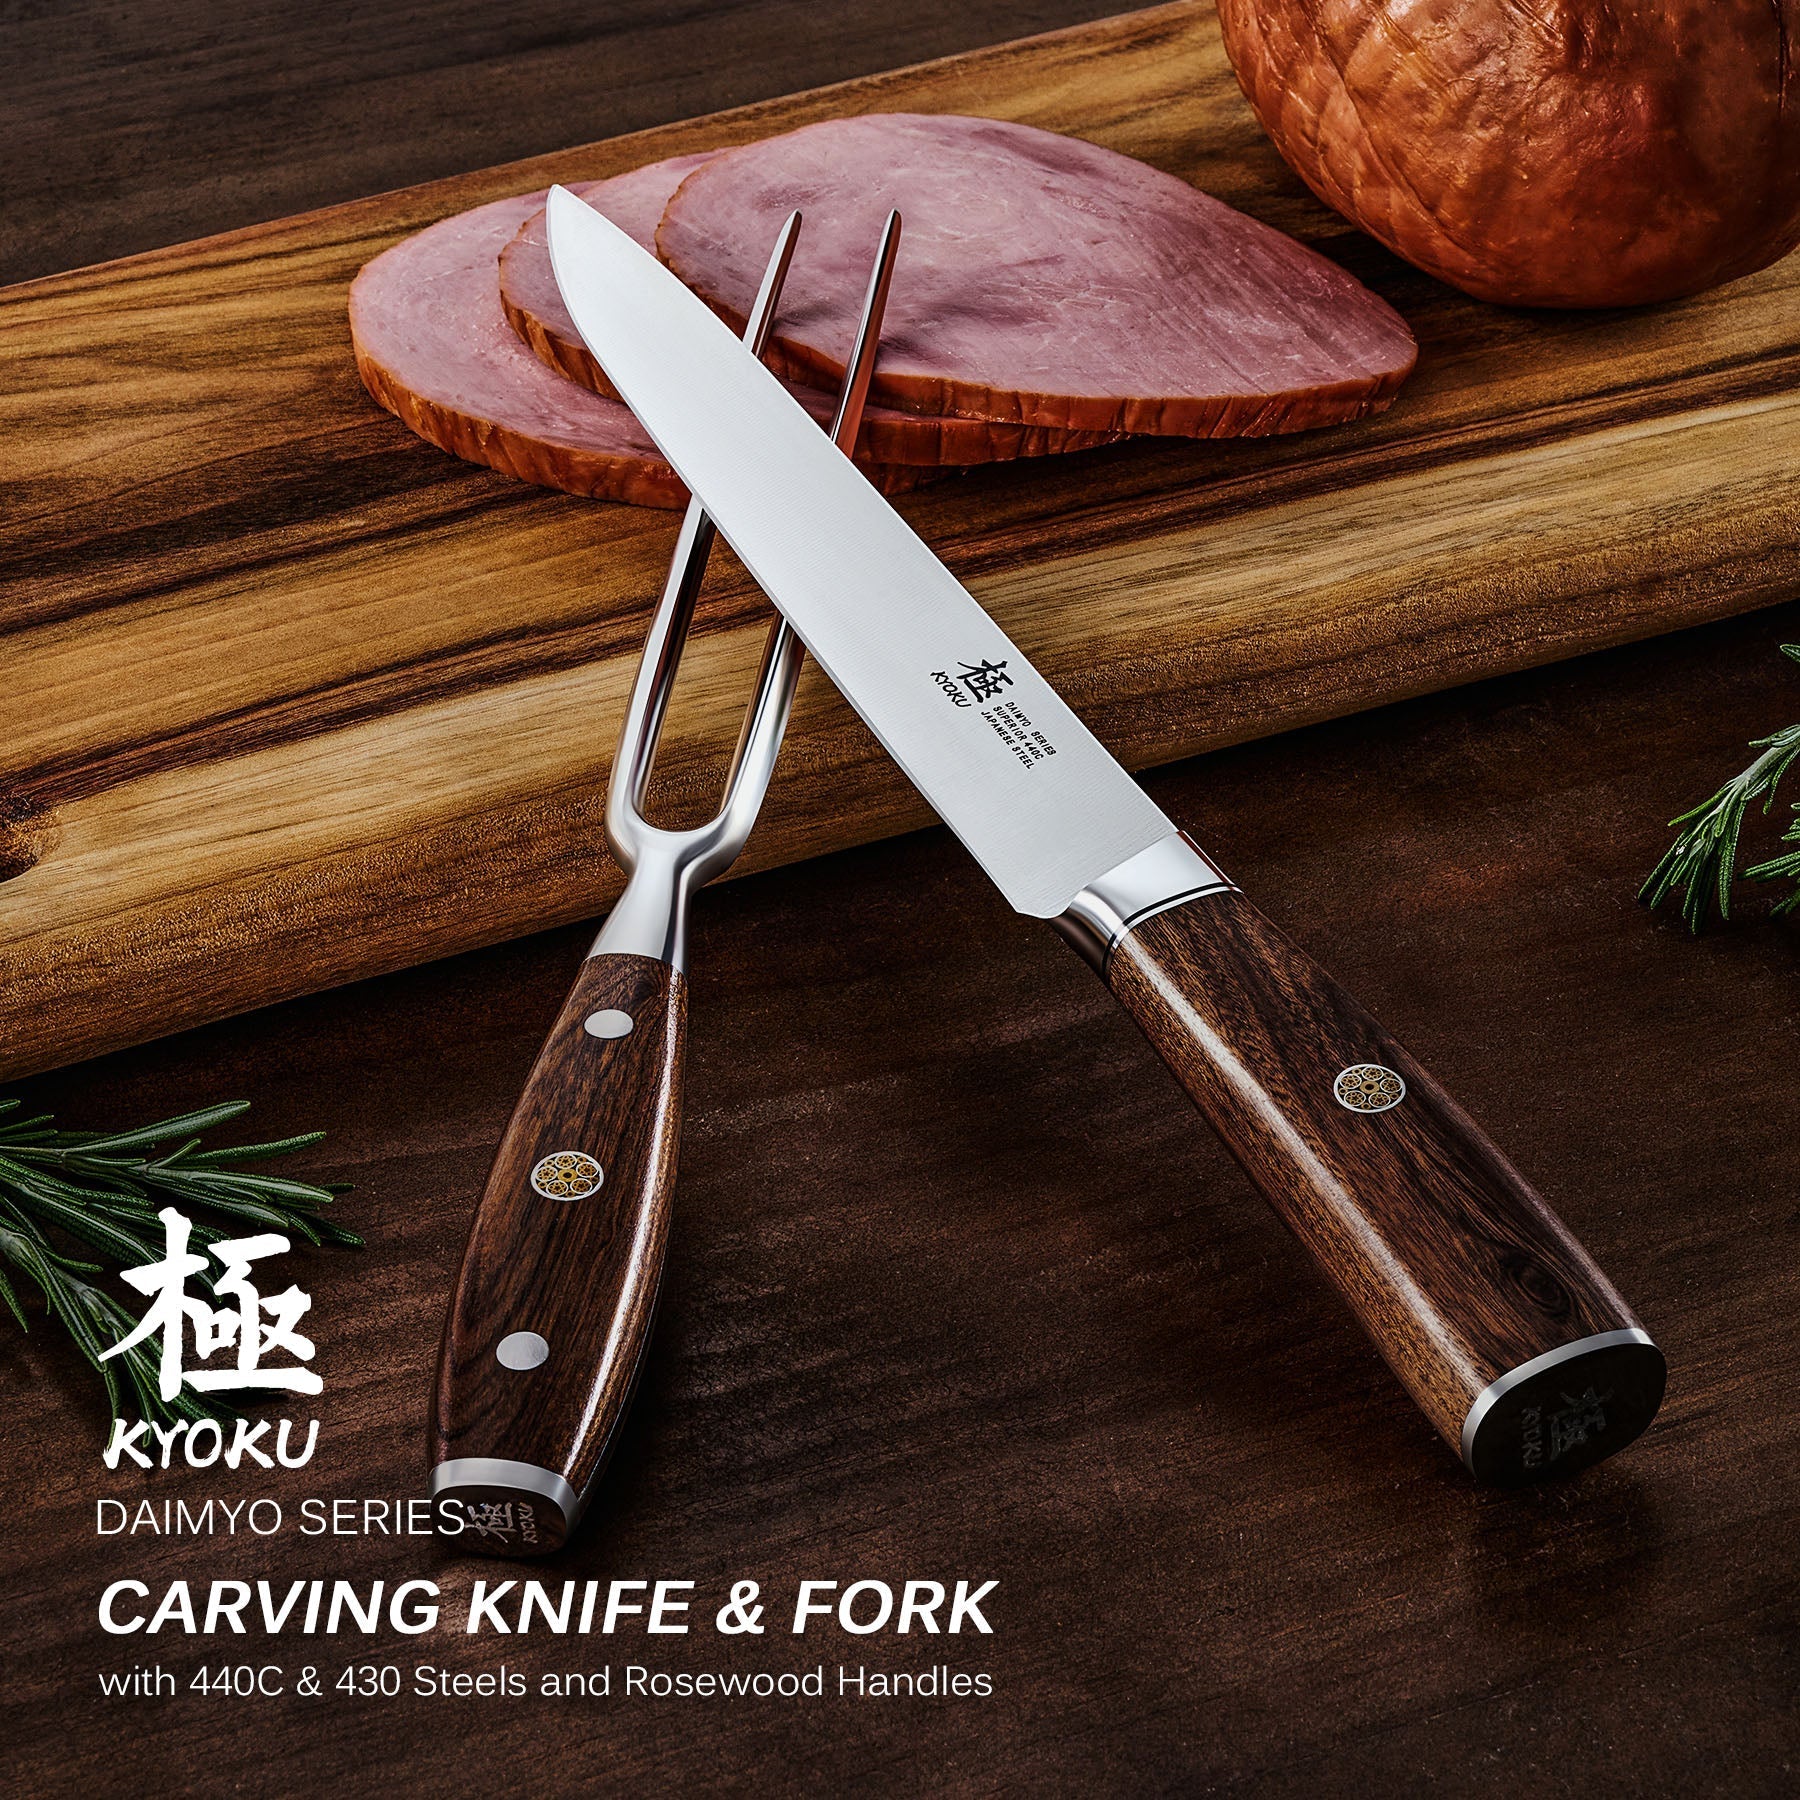 Carving Knife Kitchen Knife, Food Carving Knives, Paring Knives